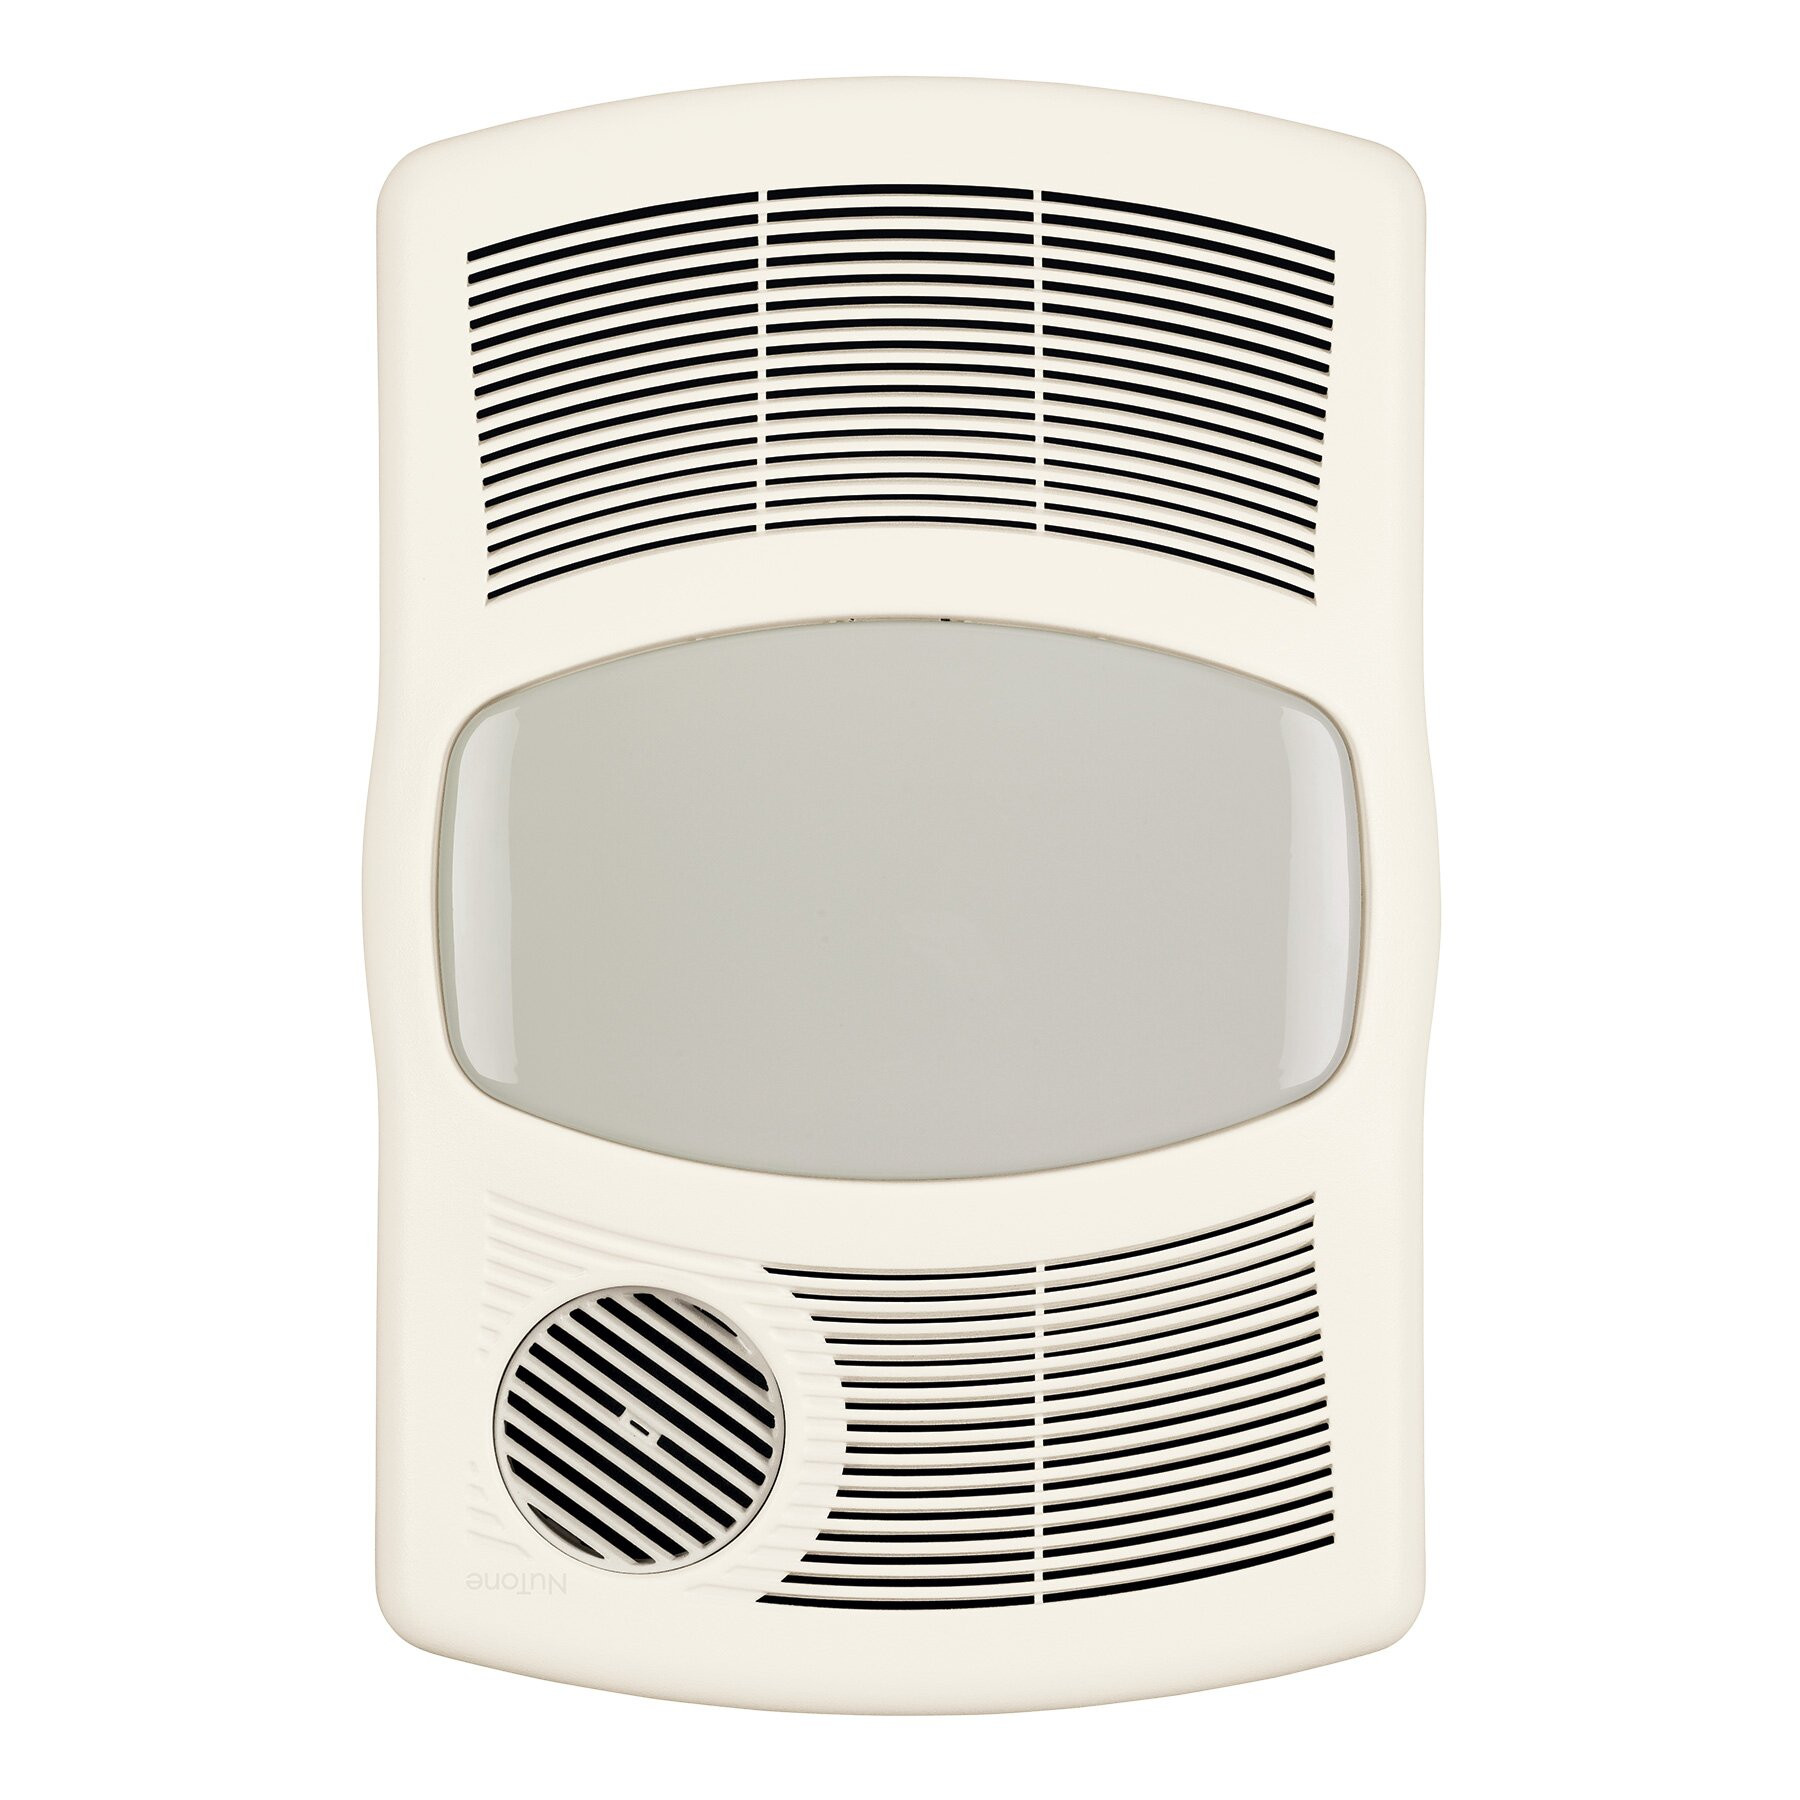 Bathroom Ceiling Exhaust Fans
 Broan 100 CFM Exhaust Bathroom Fan with Heater & Reviews